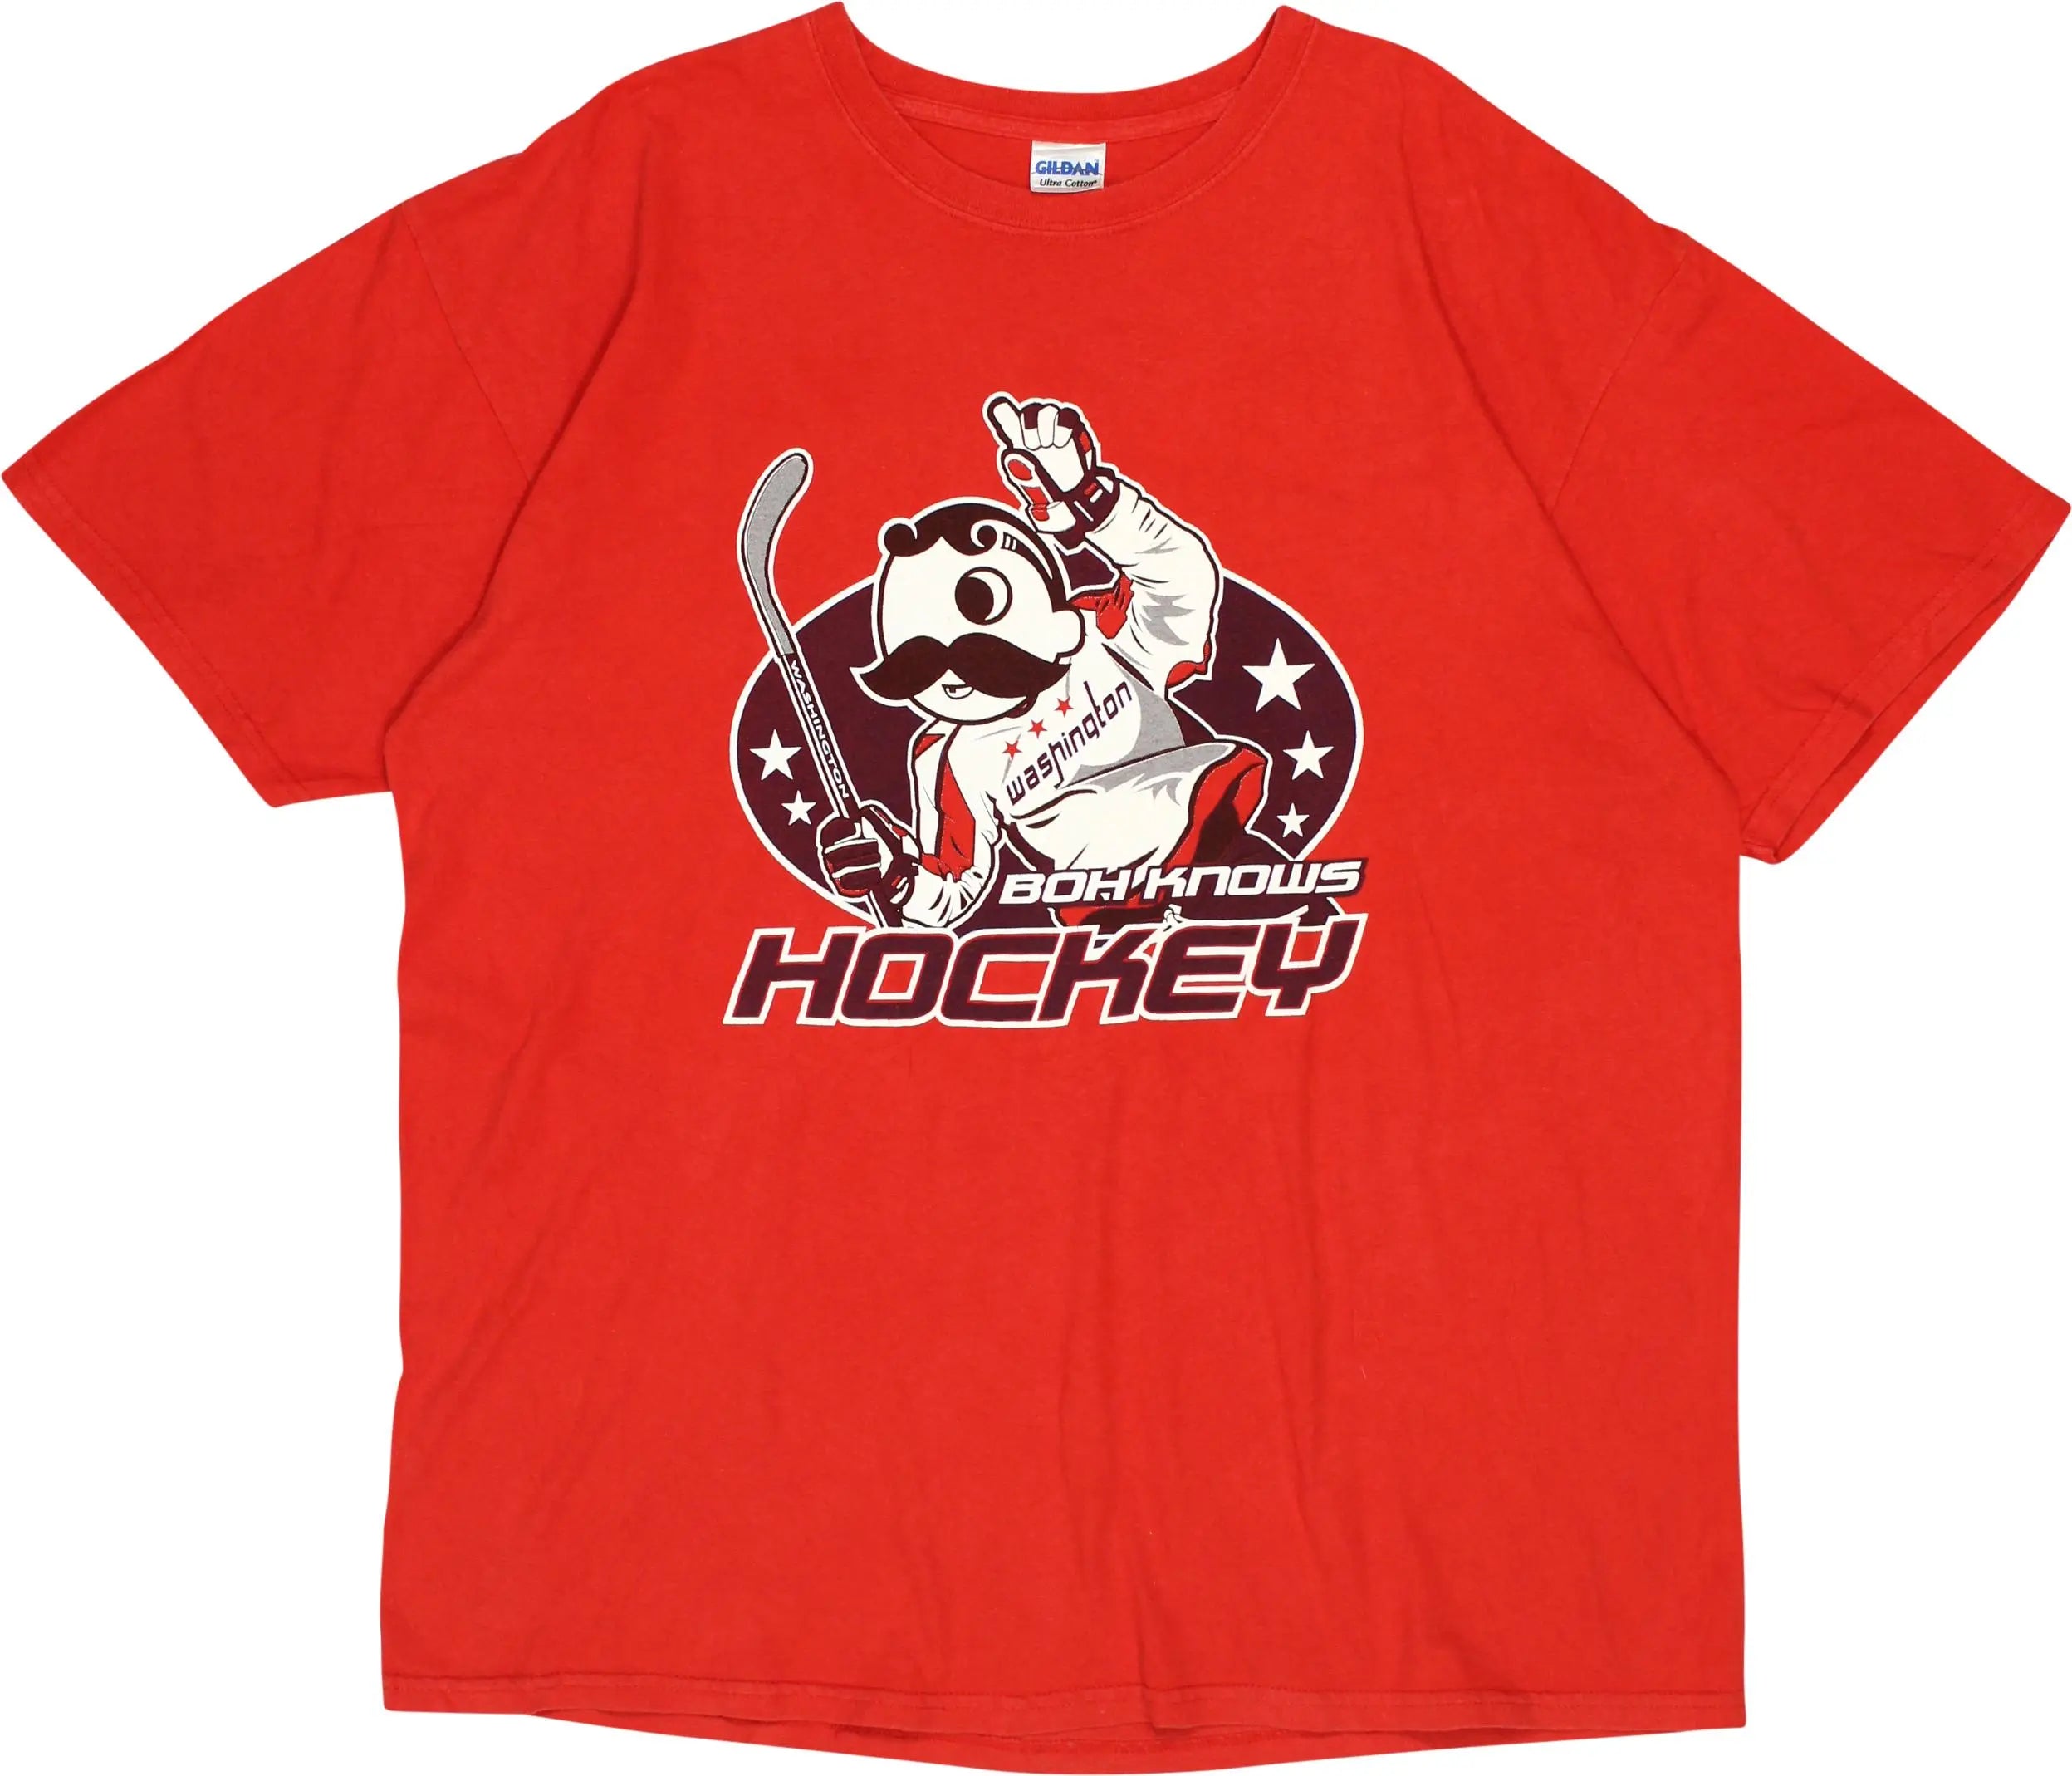 Gildan - Hockey T-Shirt- ThriftTale.com - Vintage and second handclothing